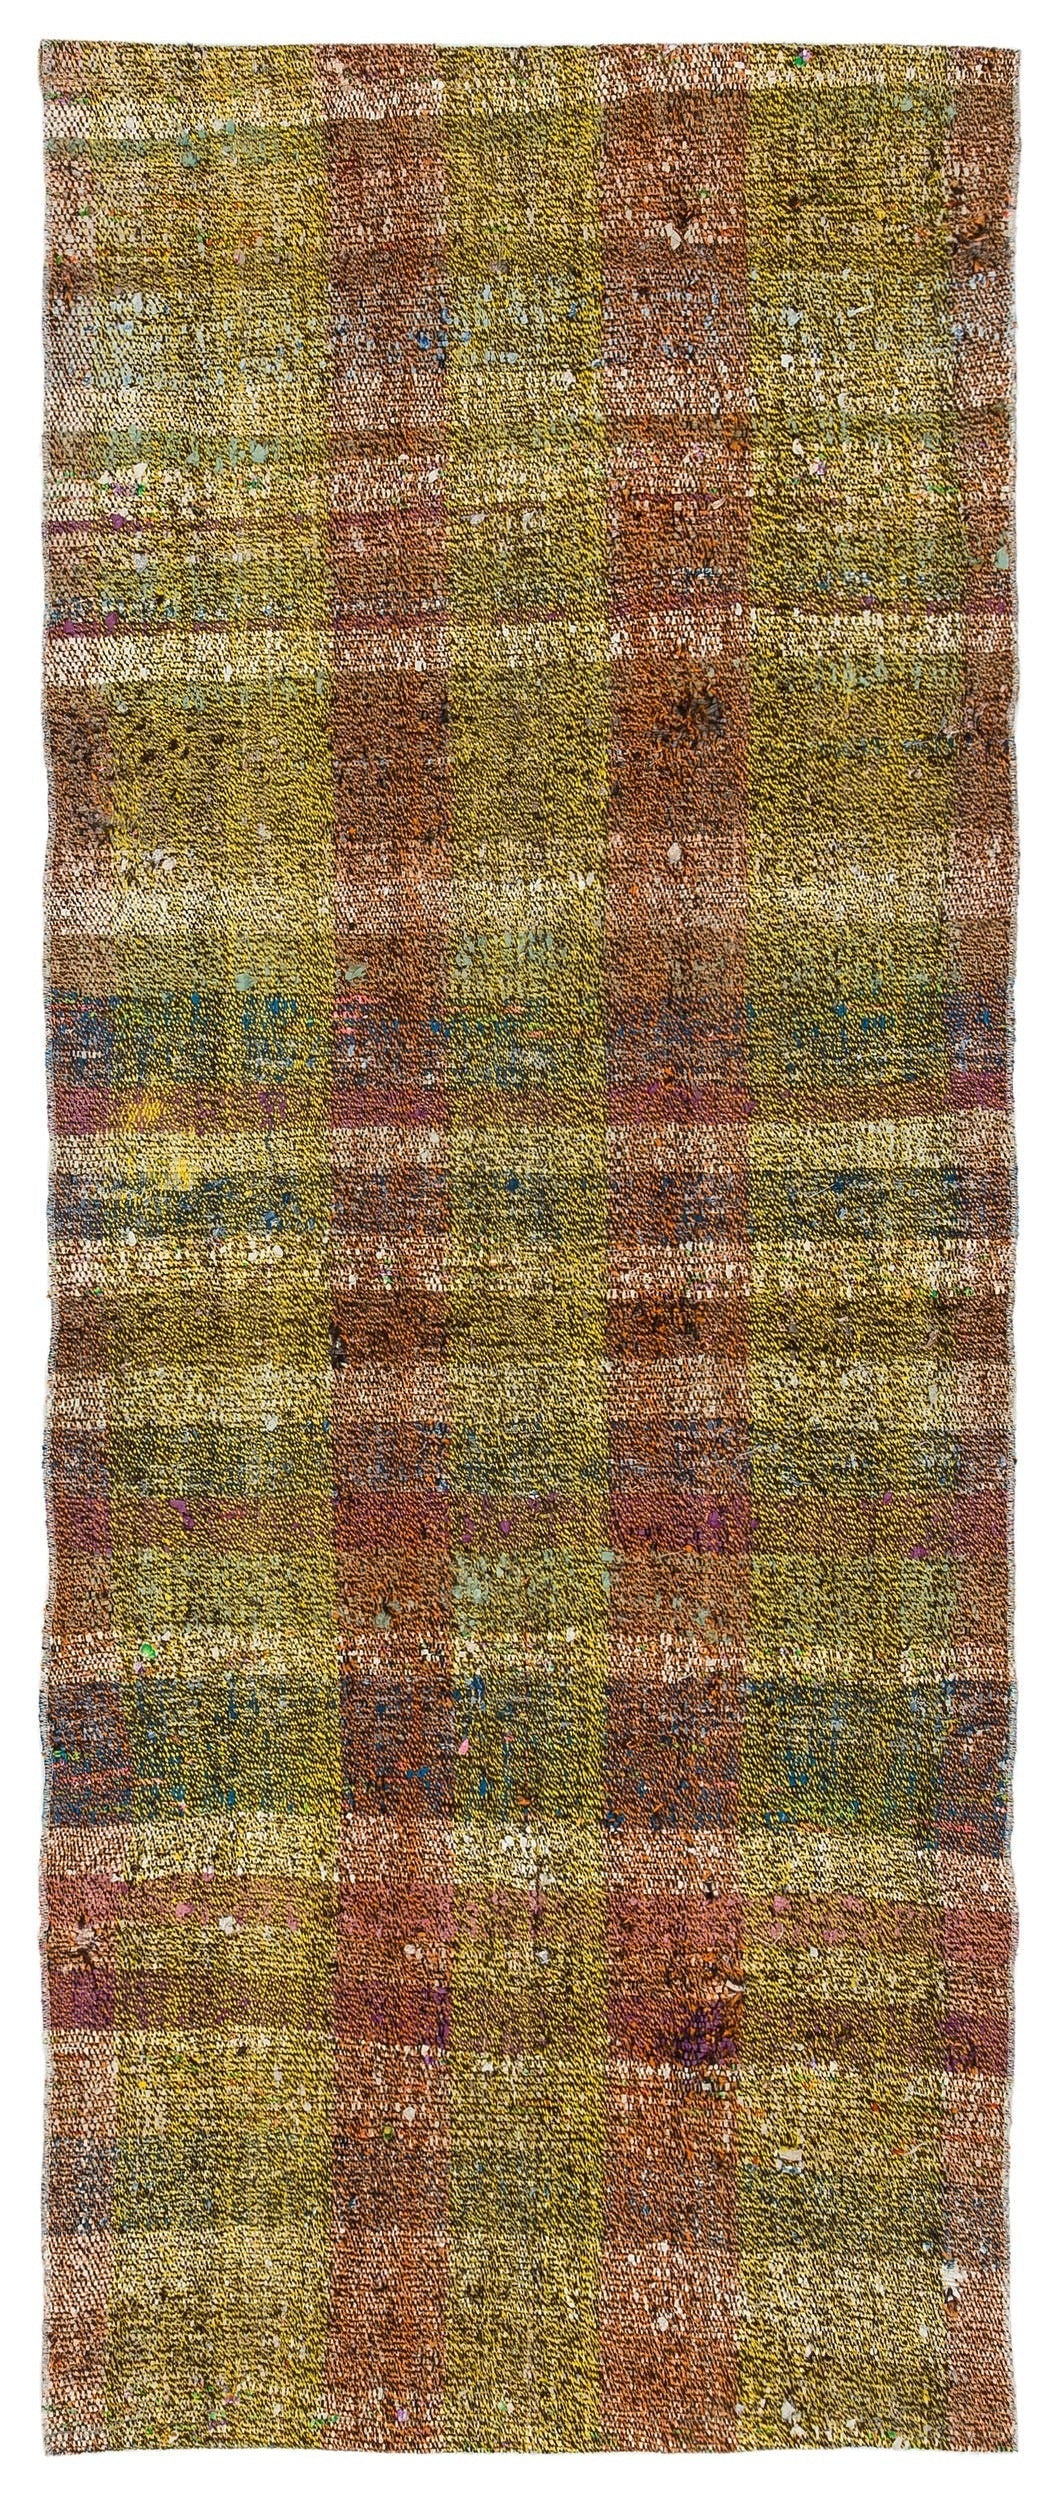 Cretan Yellow Striped Wool Hand-Woven Carpet 078 x 190